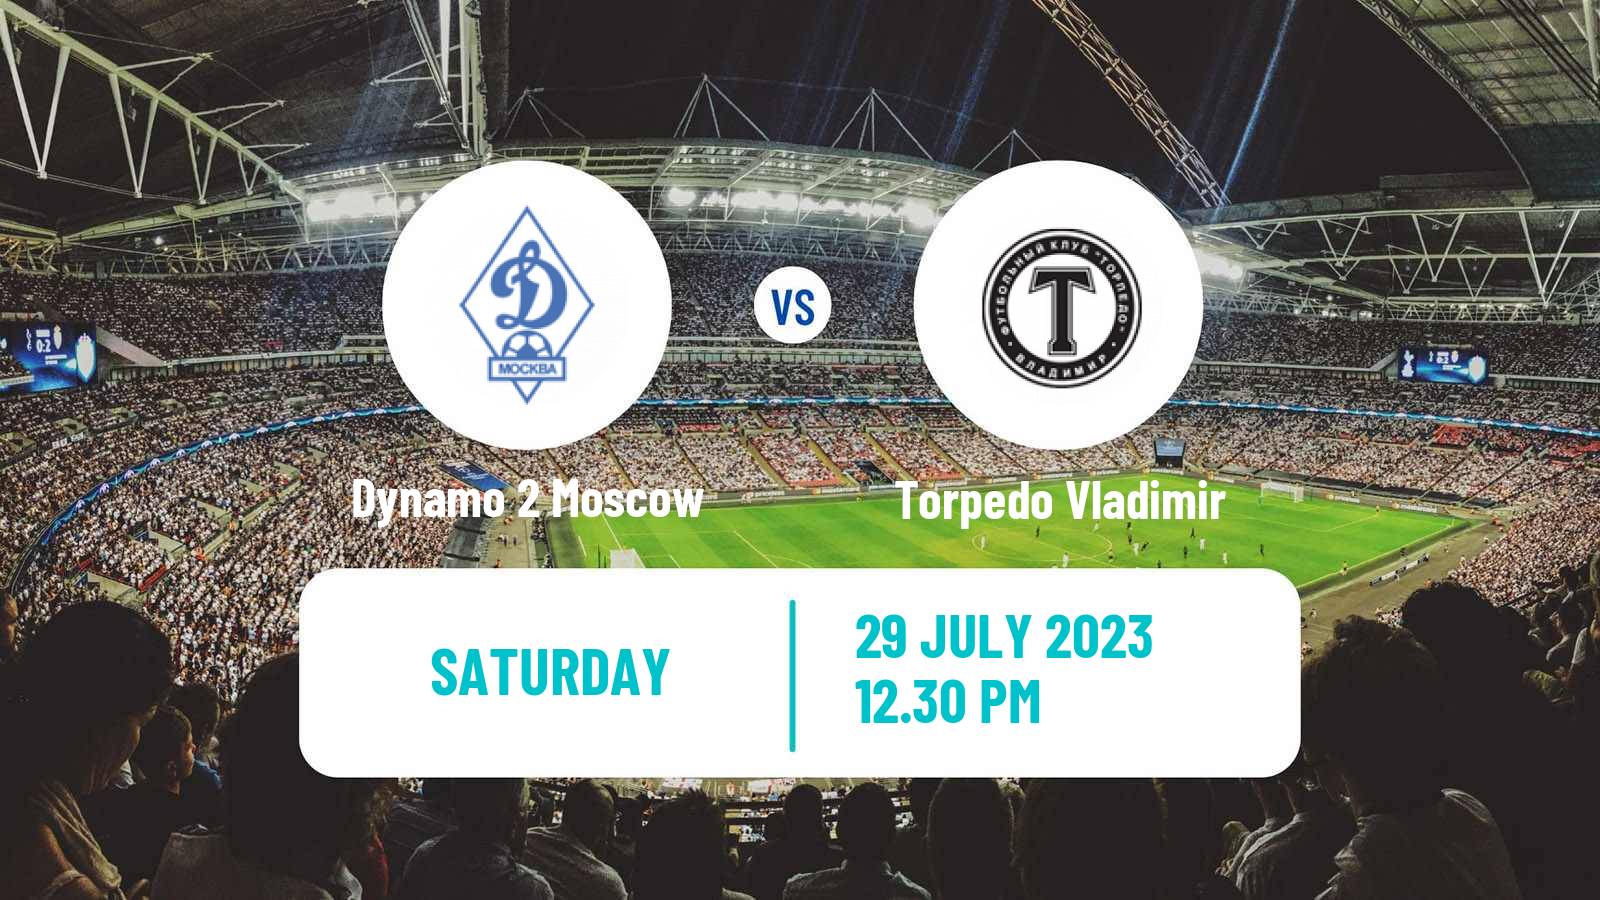 Soccer FNL 2 Division B Group 2 Dynamo 2 Moscow - Torpedo Vladimir